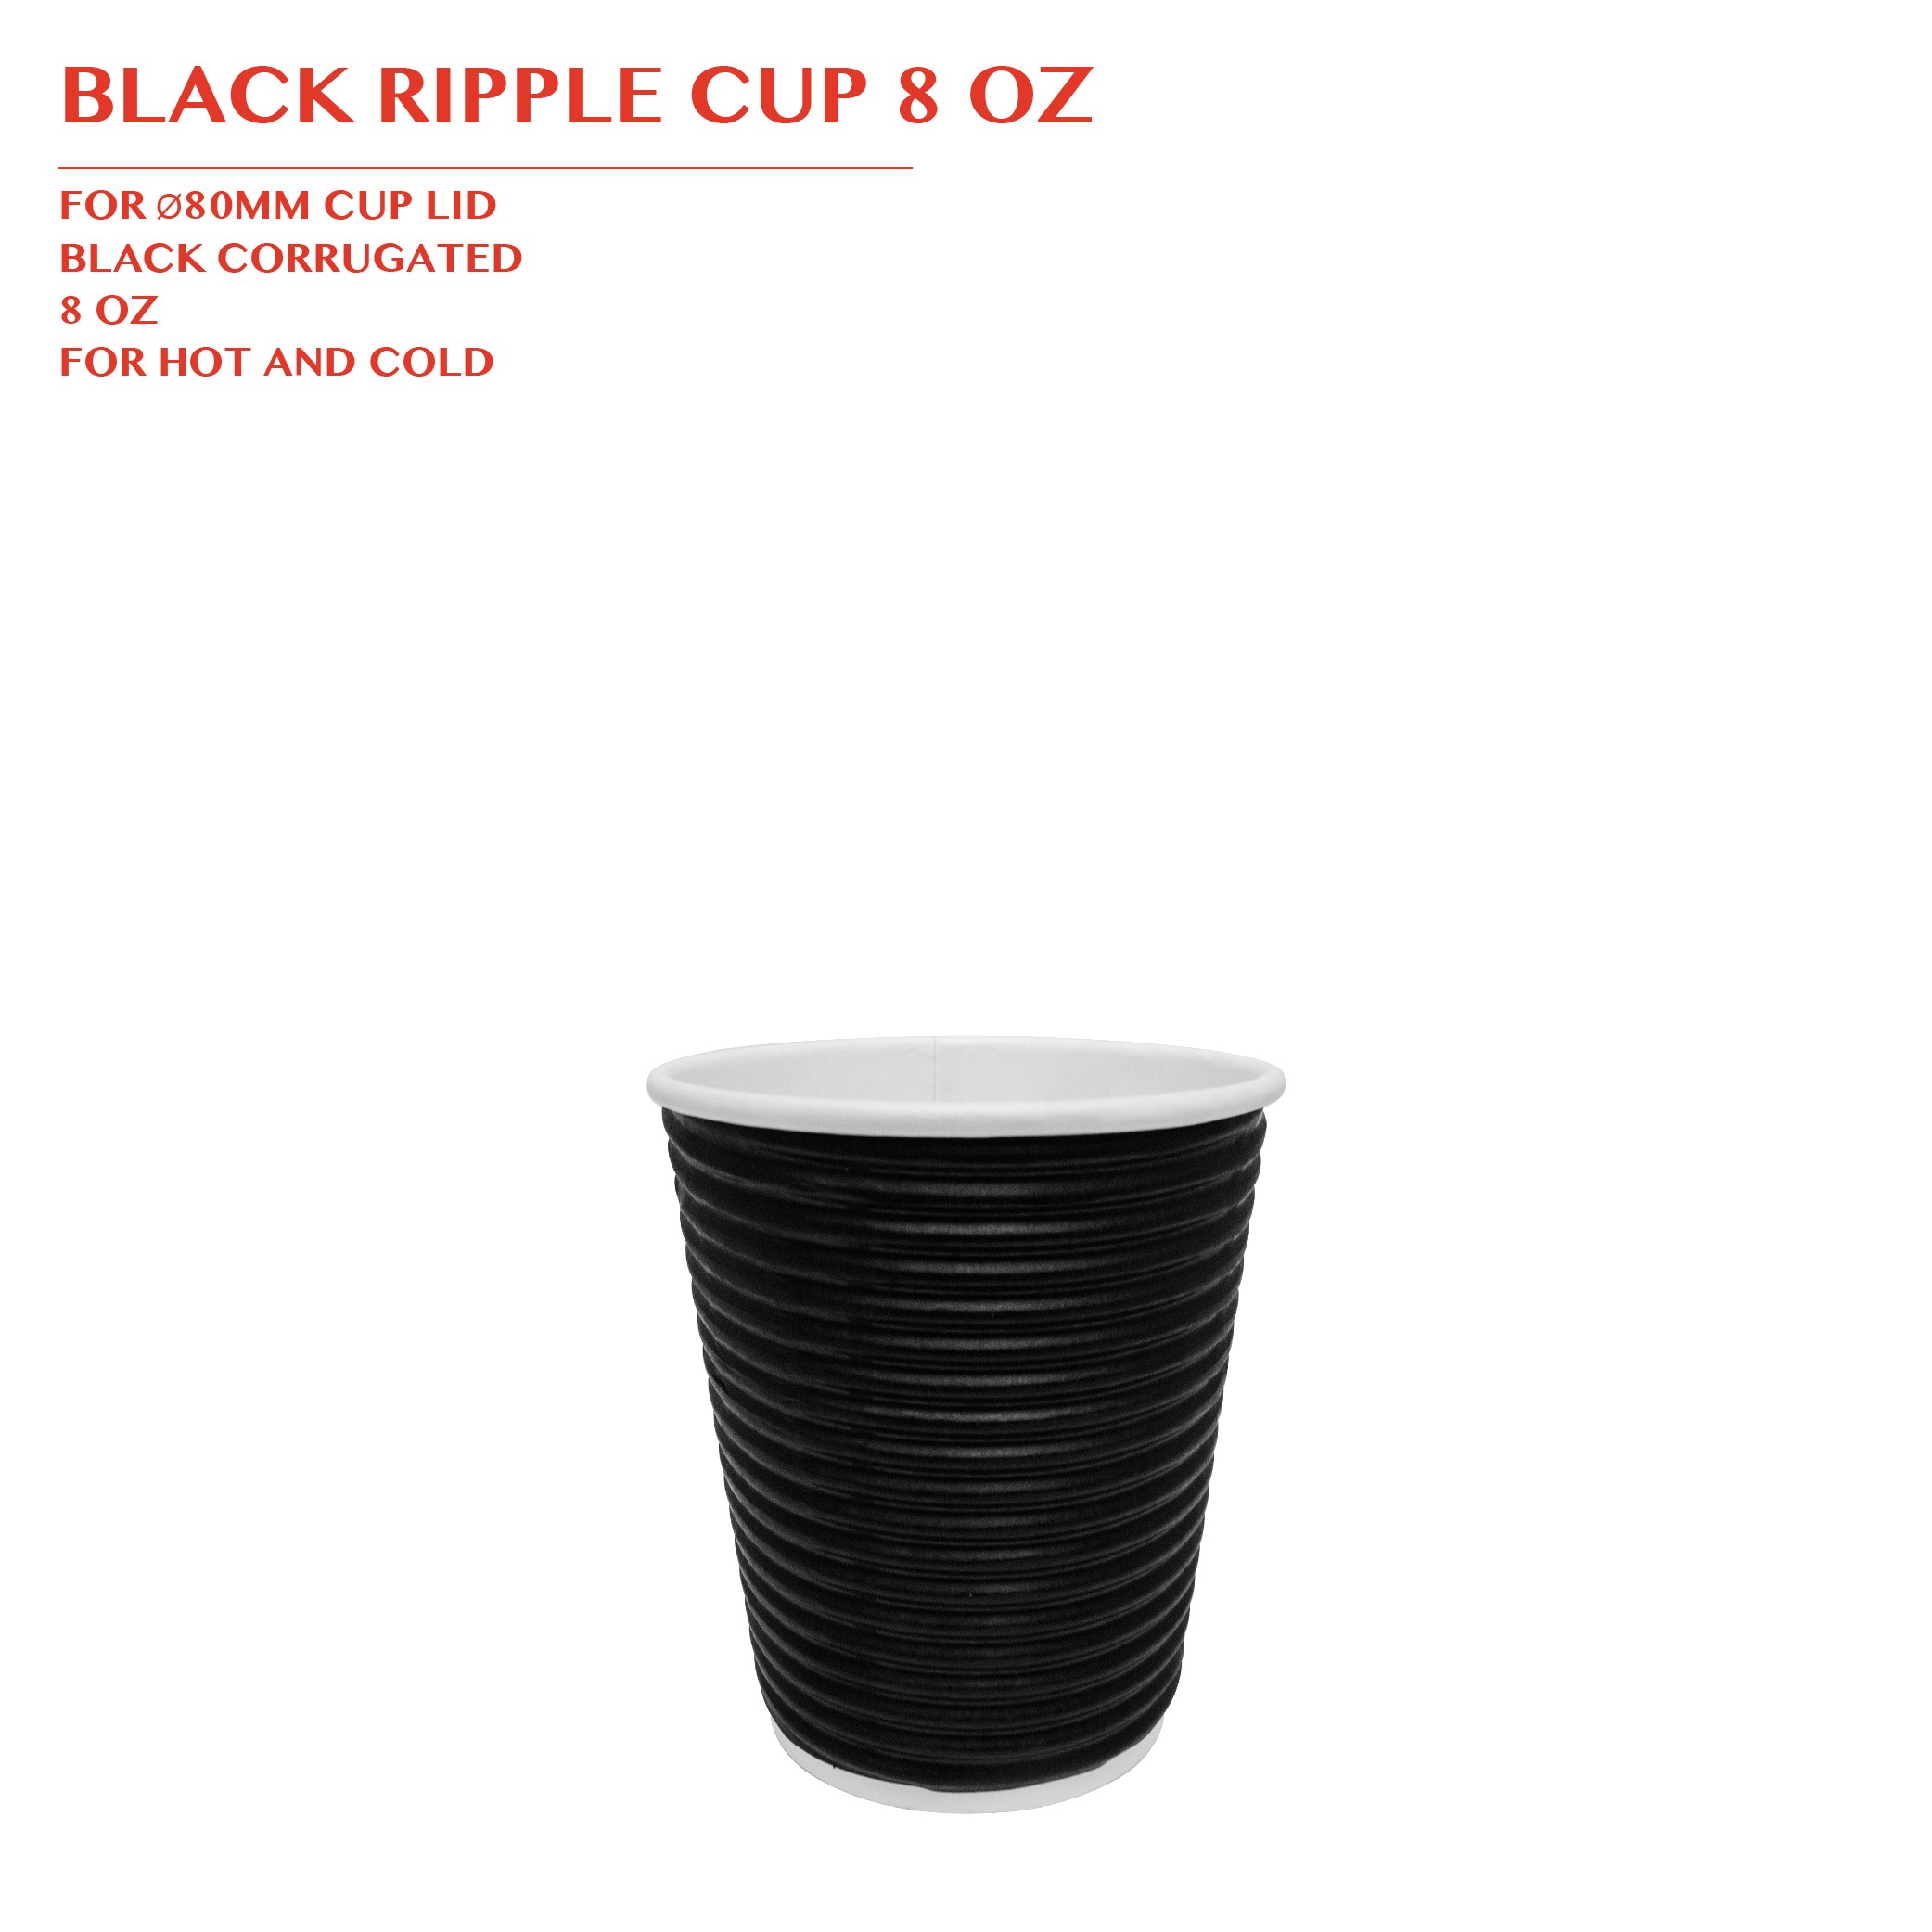 PRE-ORDER BLACK RIPPLE CUP 8 OZ 500PCS/CTN